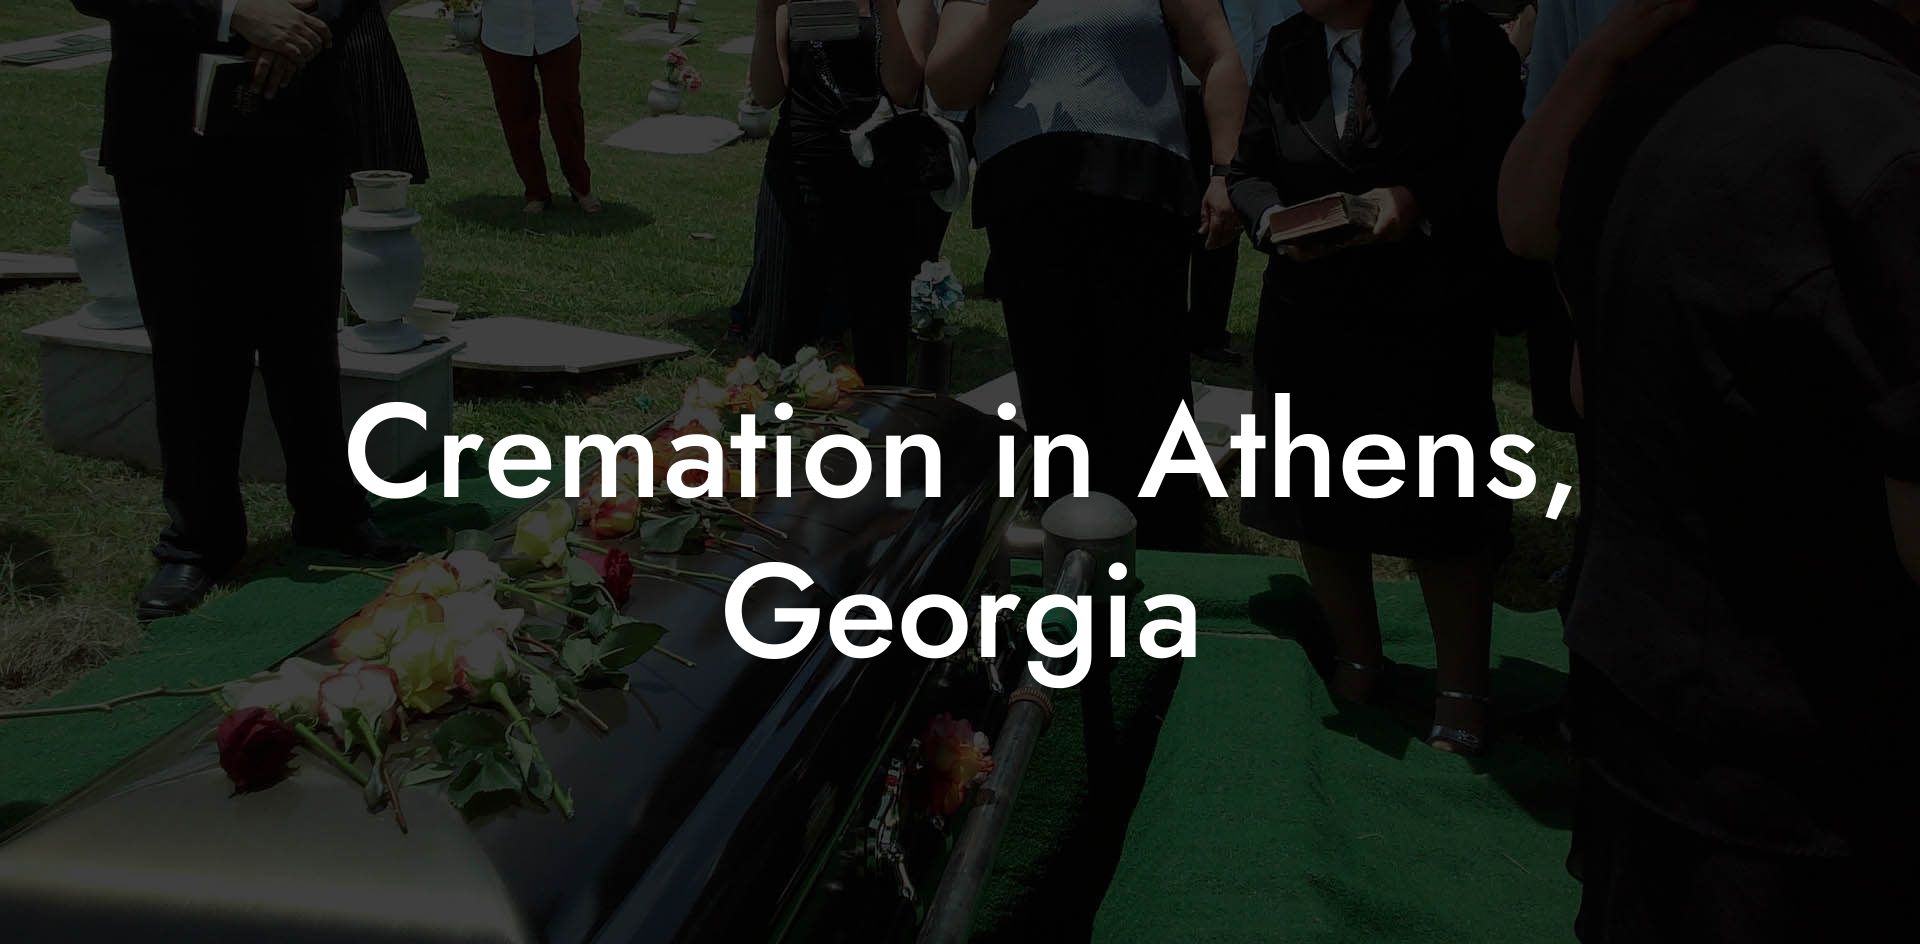 Cremation in Athens, Georgia